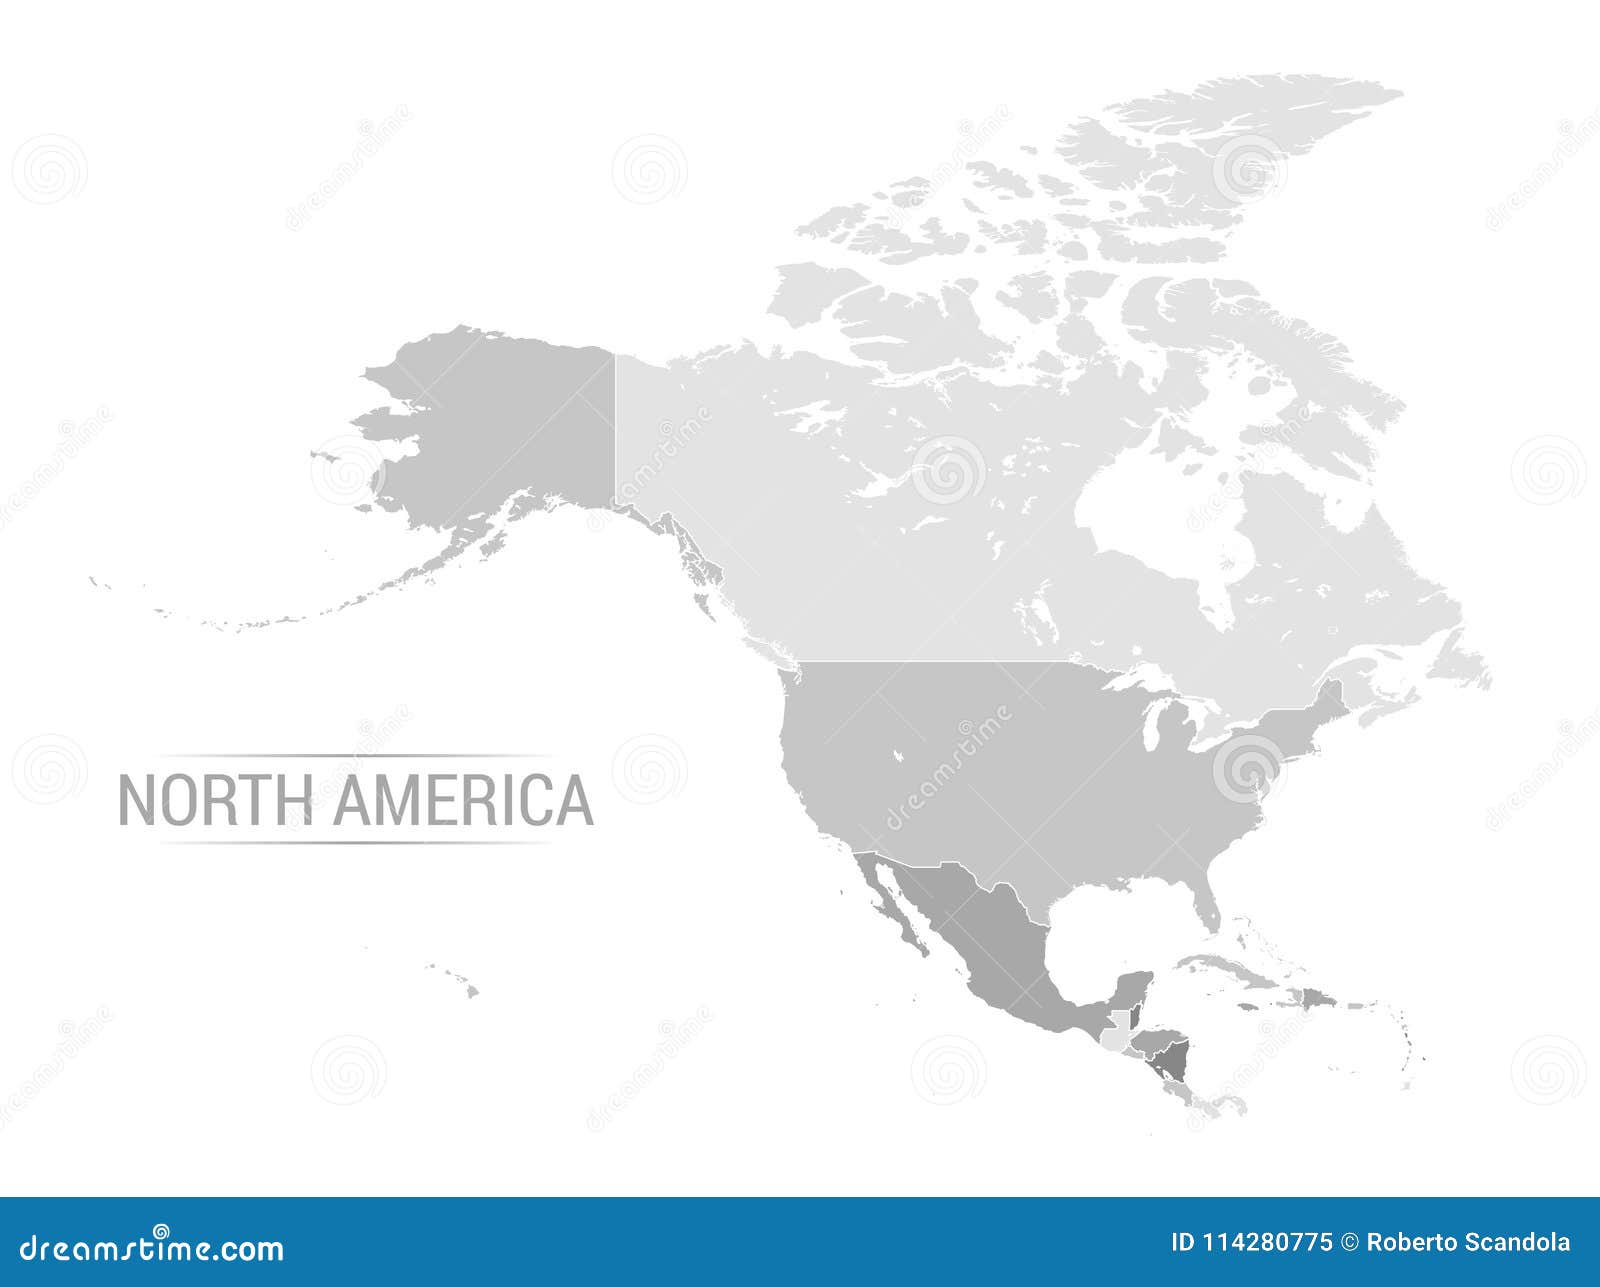  north america grey map